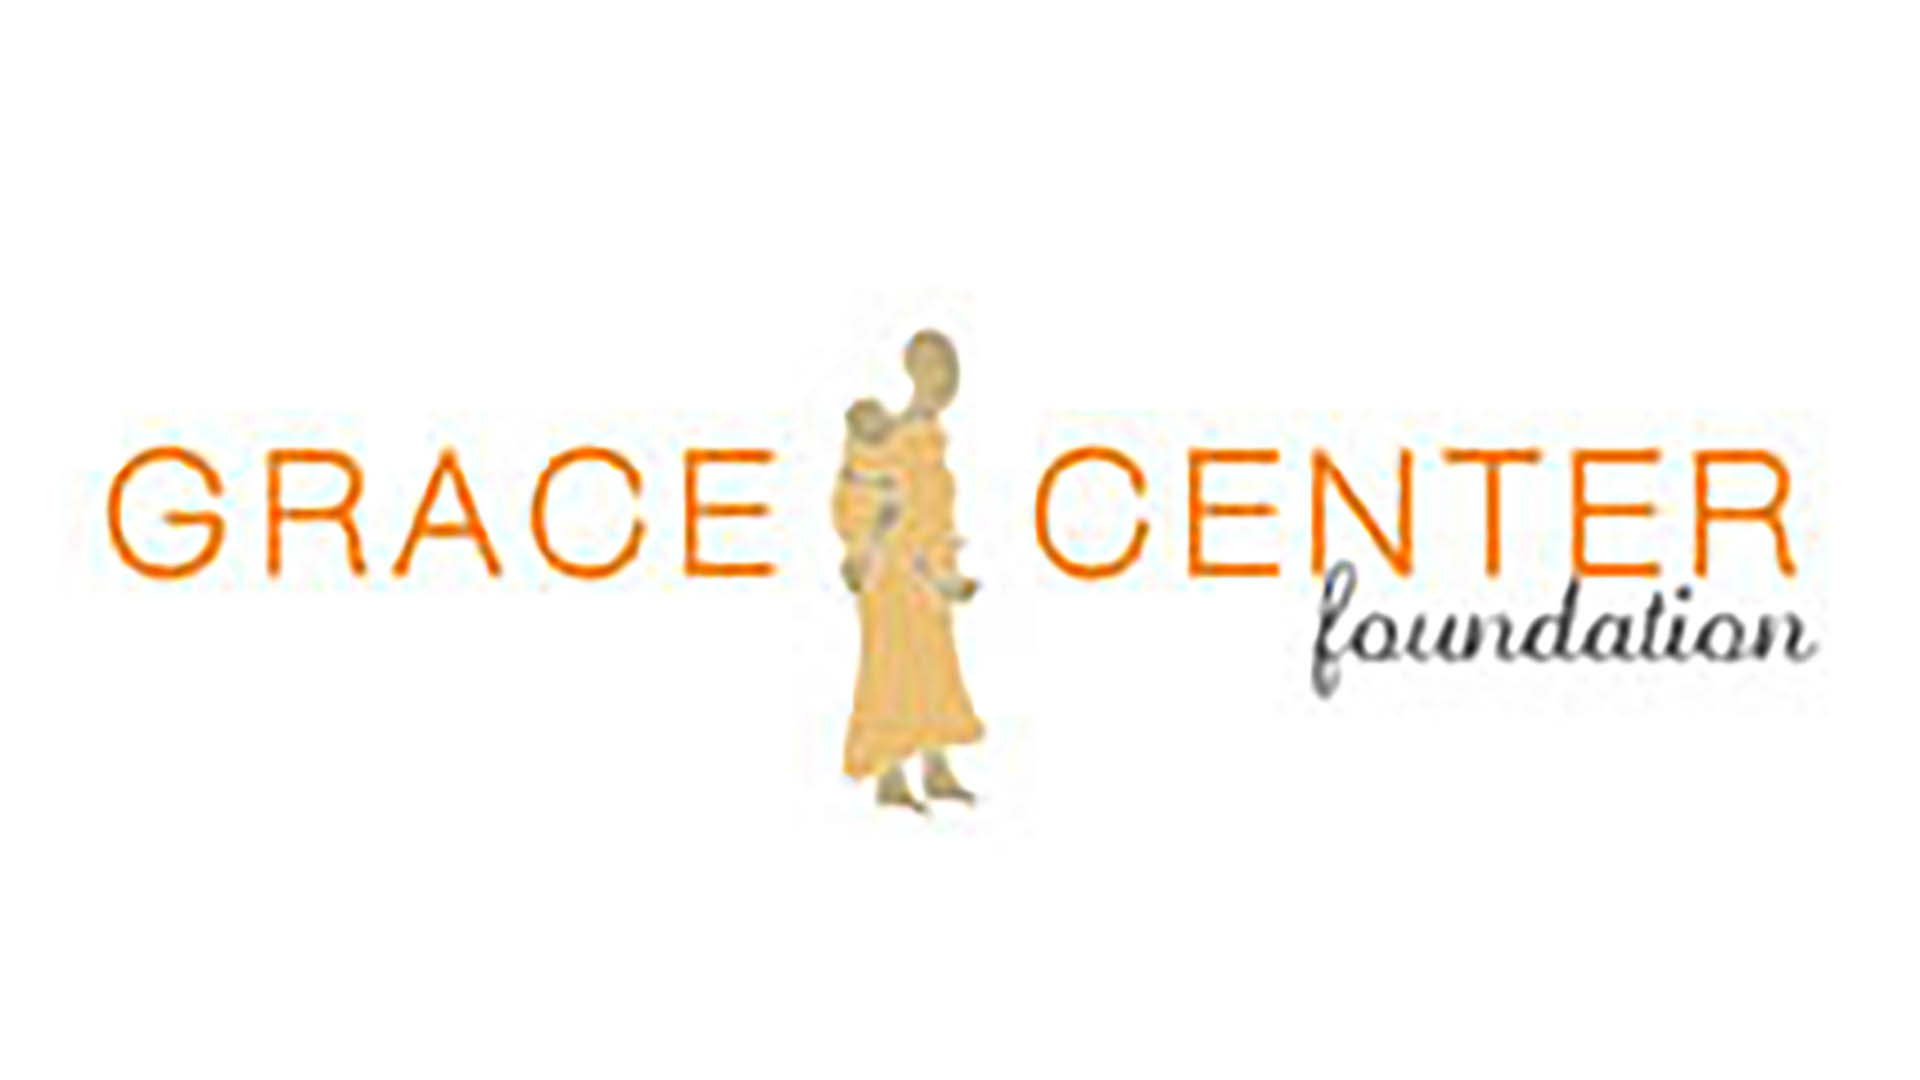 Grace Center Foundation logo